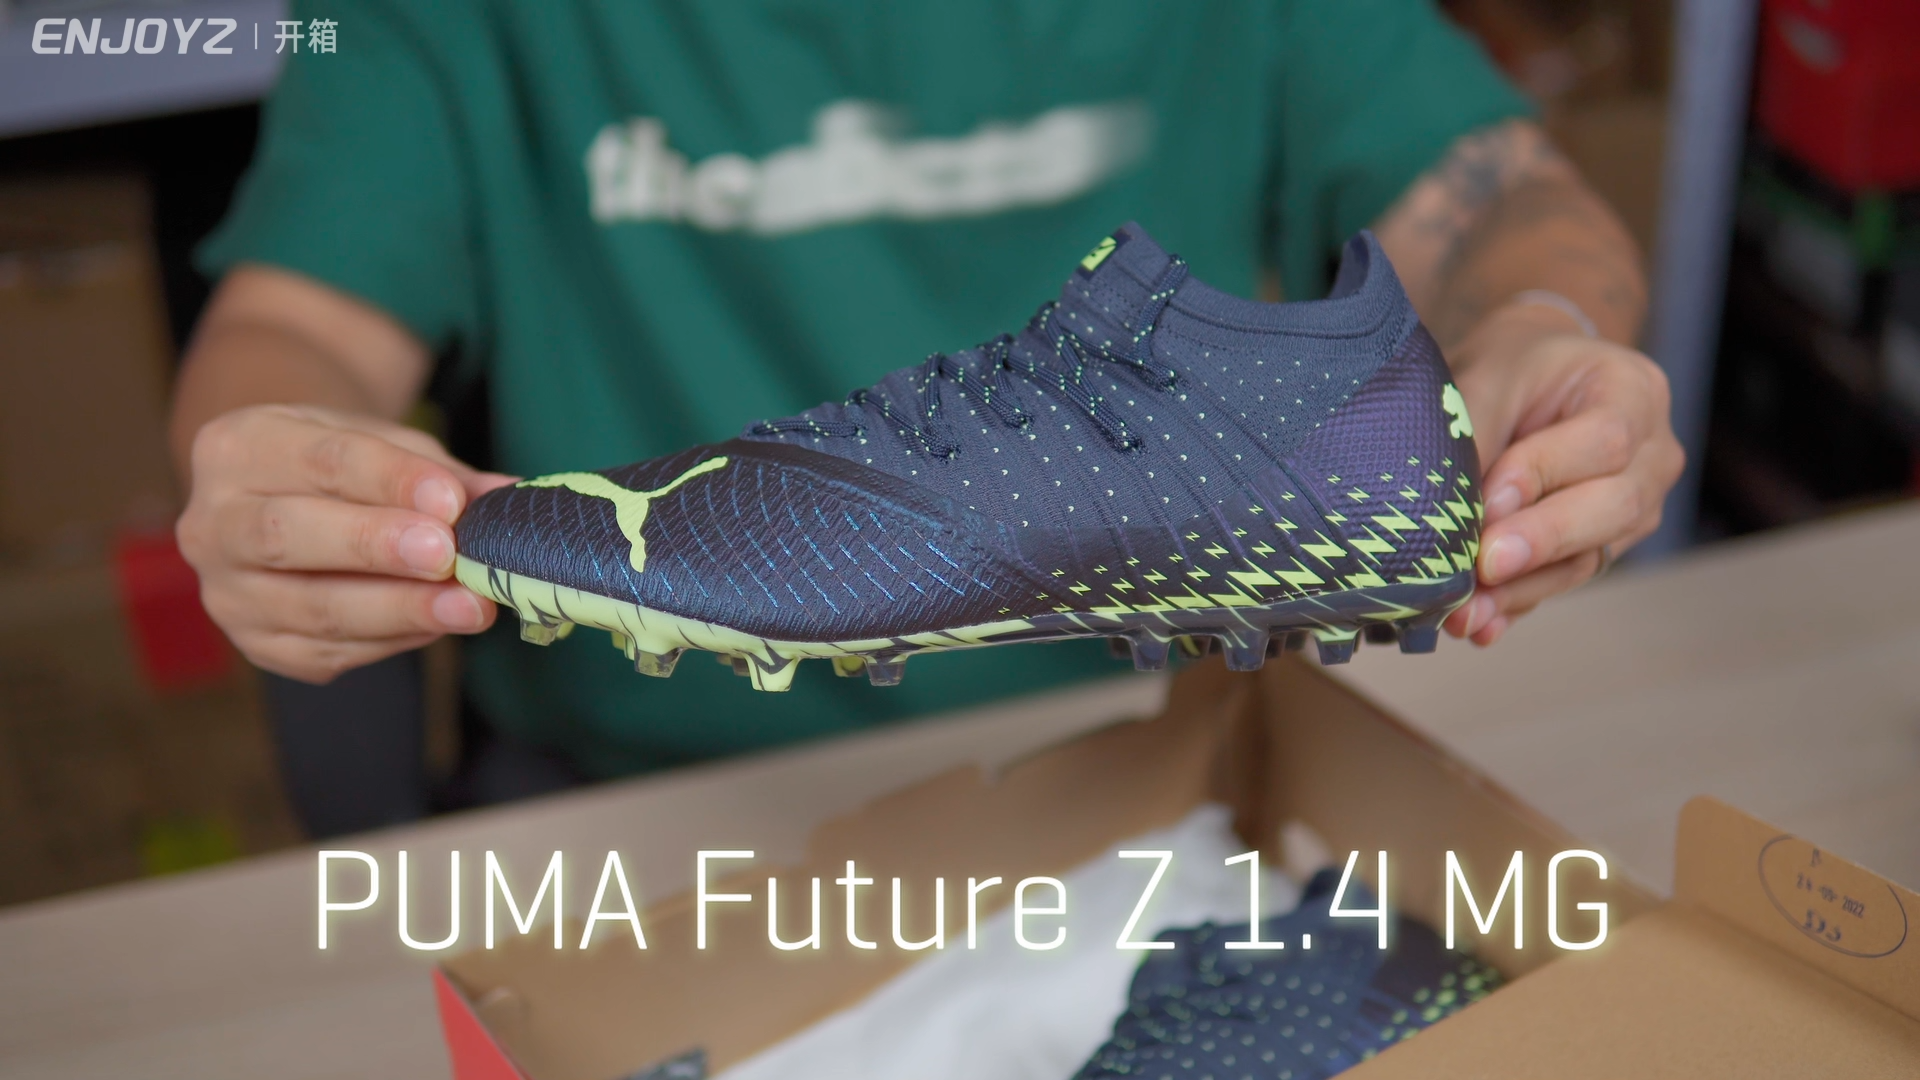 Puma Future Z 1 4 Mg 足球鞋开箱 Enjoyz足球装备网手机版